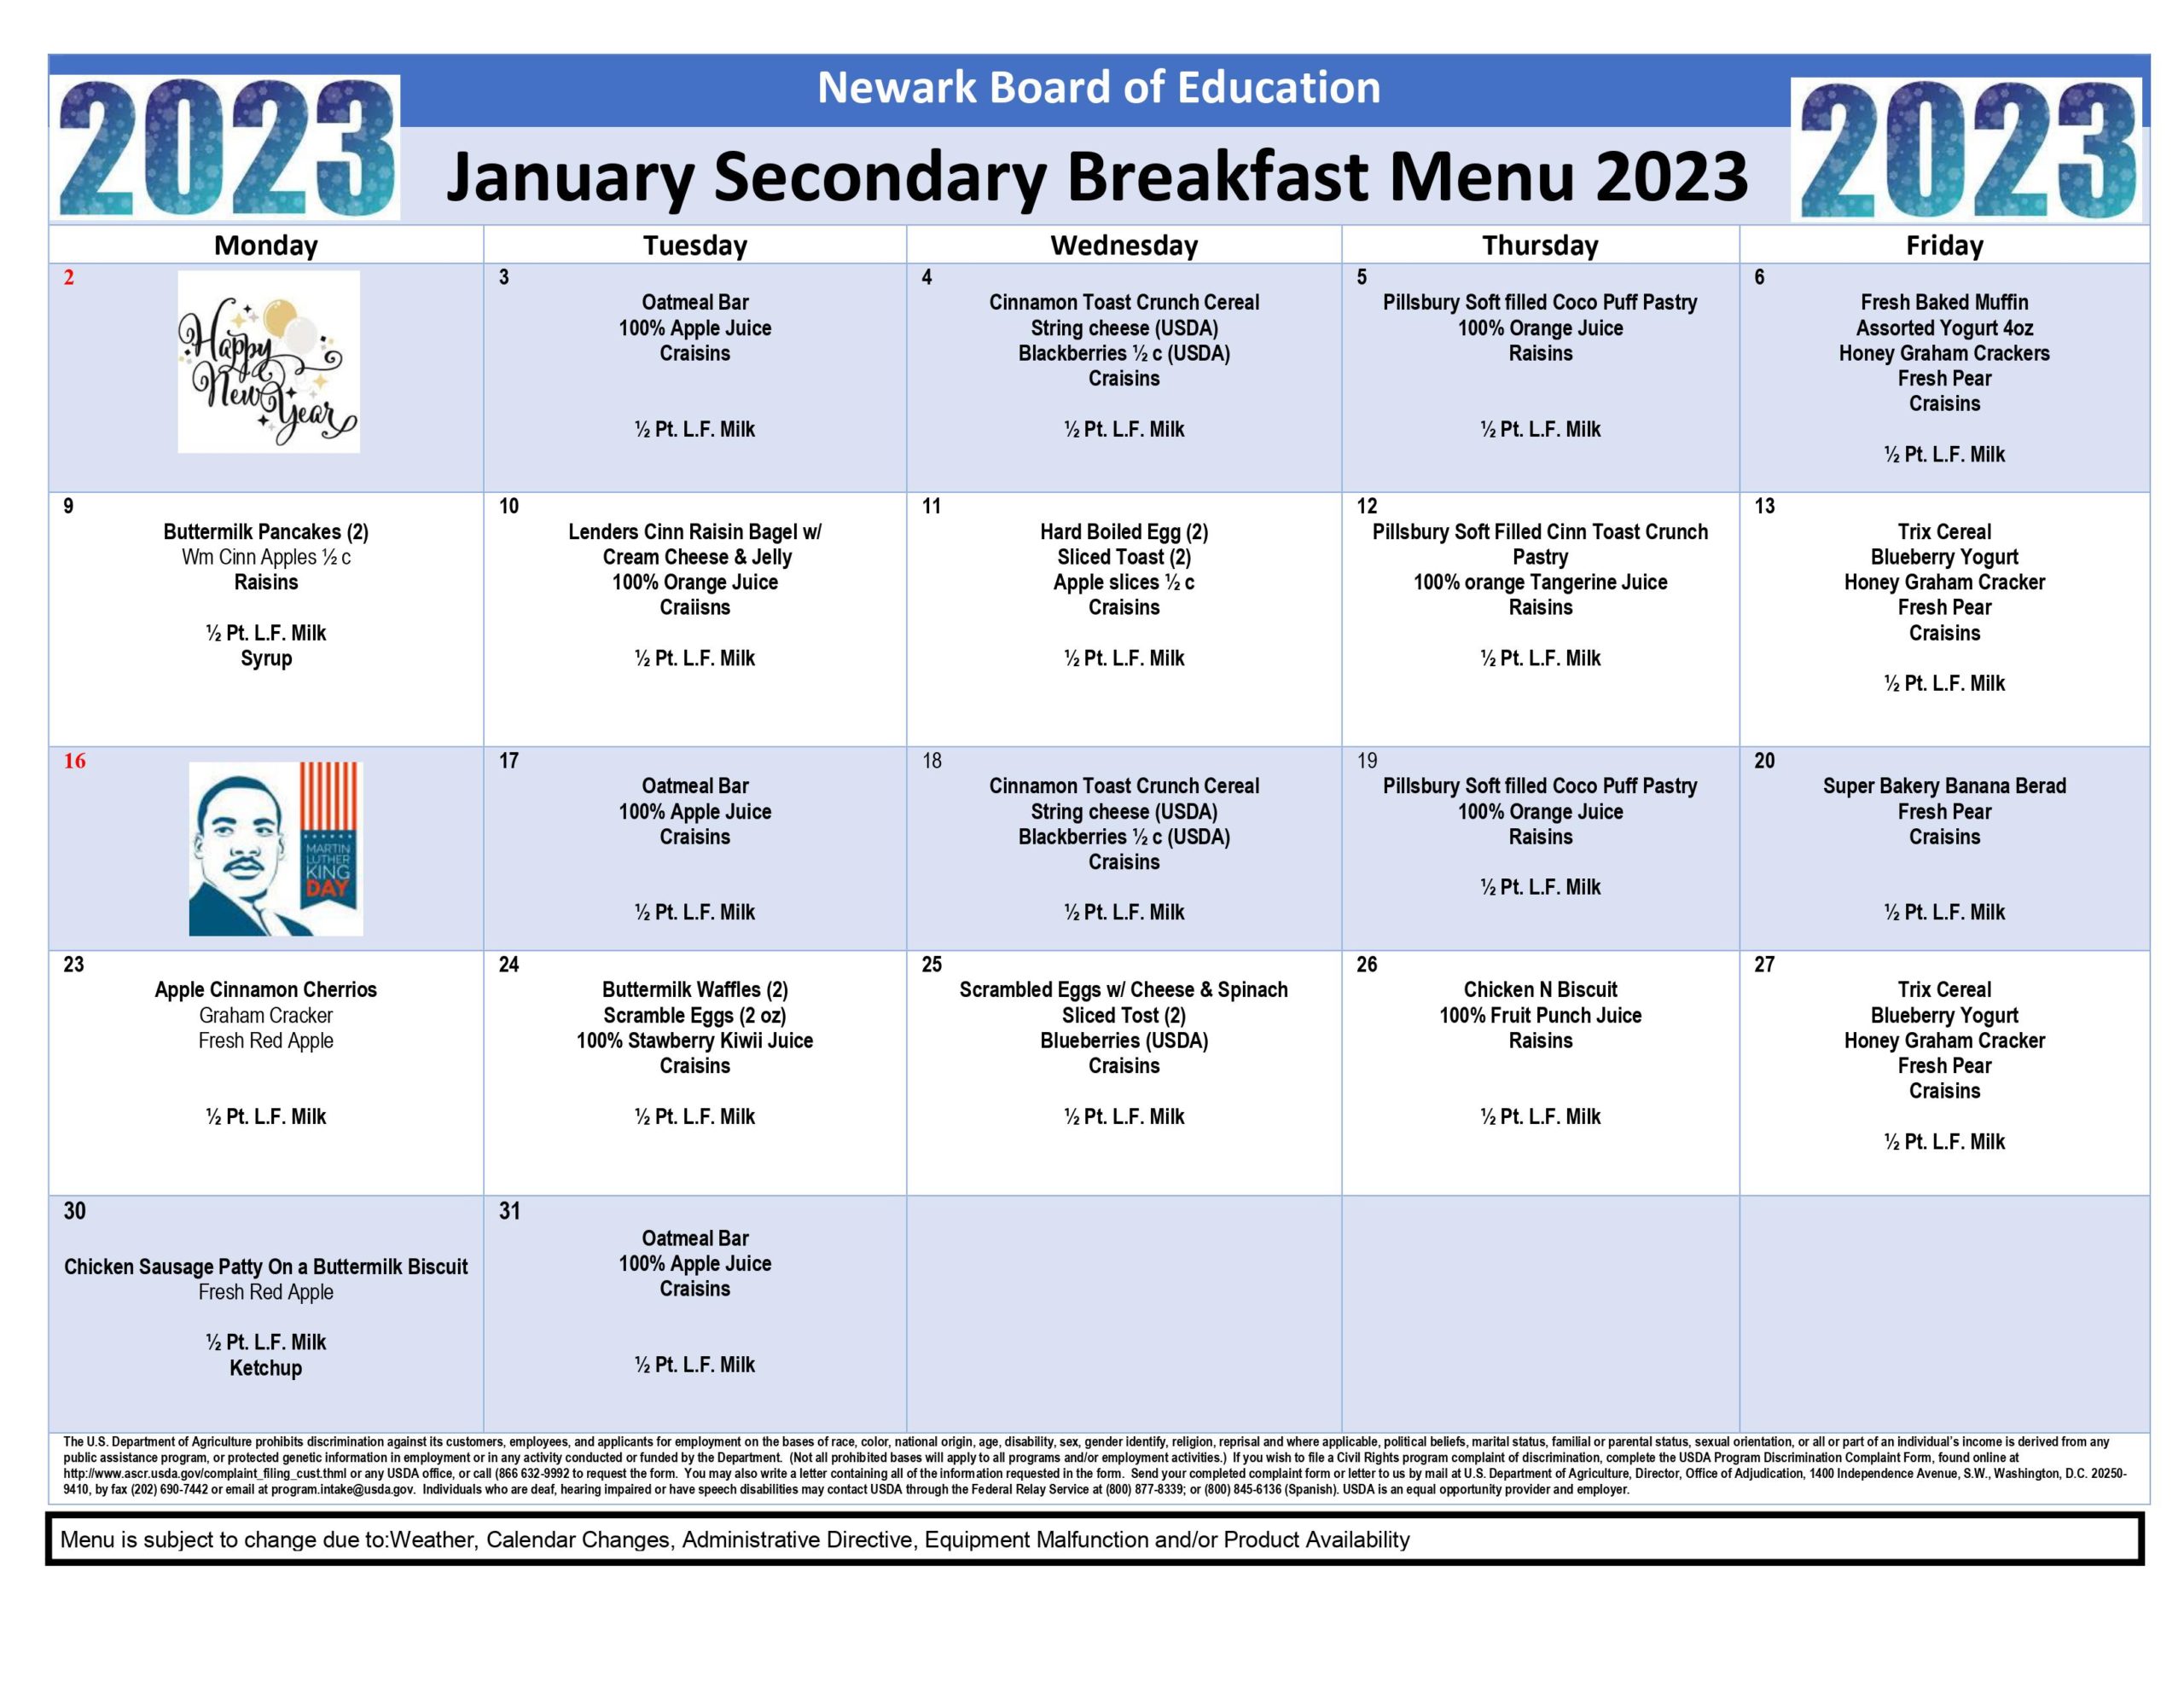 January 2023 - Secondary Breakfast Menu